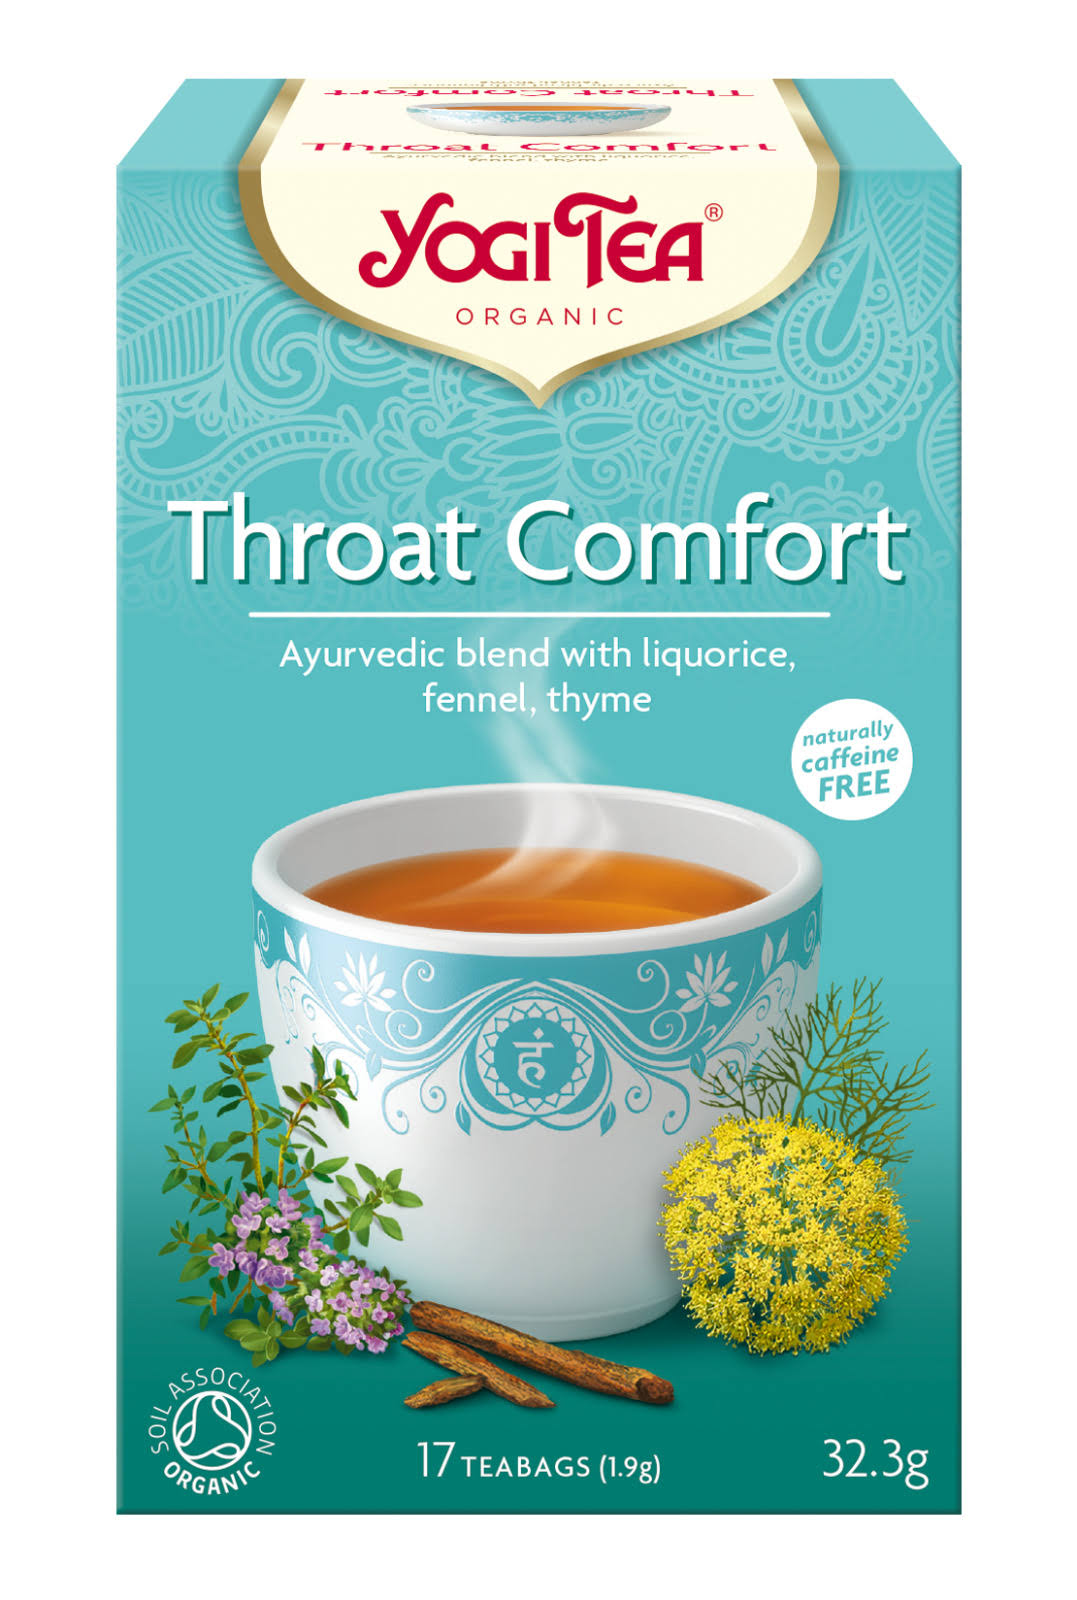 Yogi Tea Organic Throat Comfort Tea - 17 Teabags